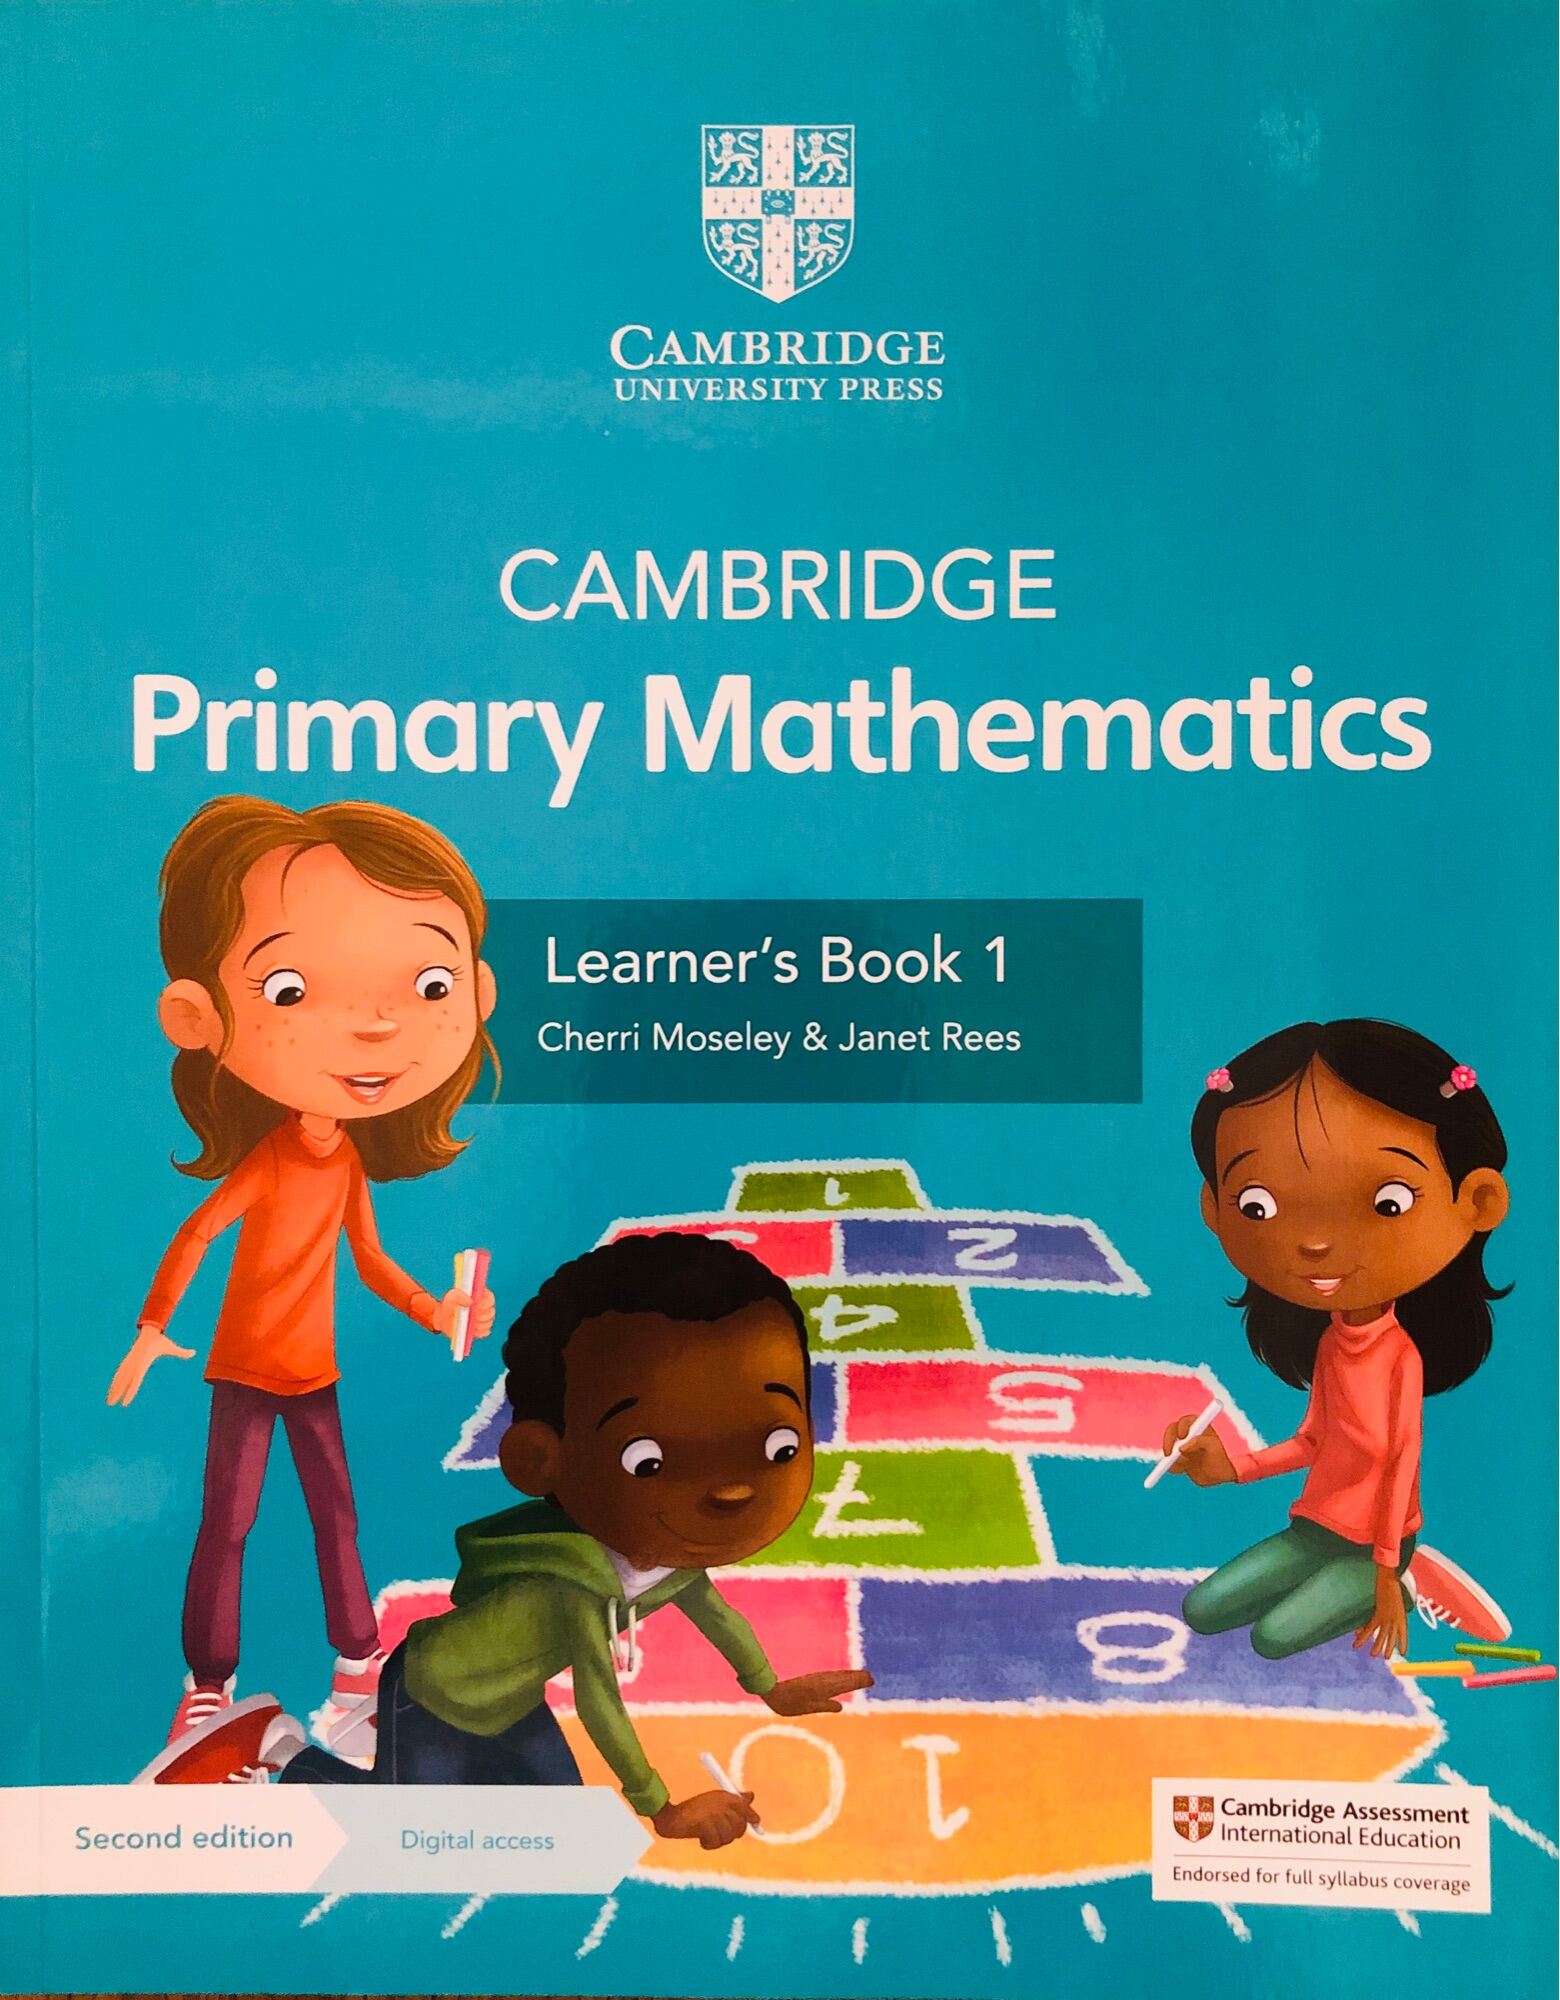 Cambridge Primary Mathematics second edition